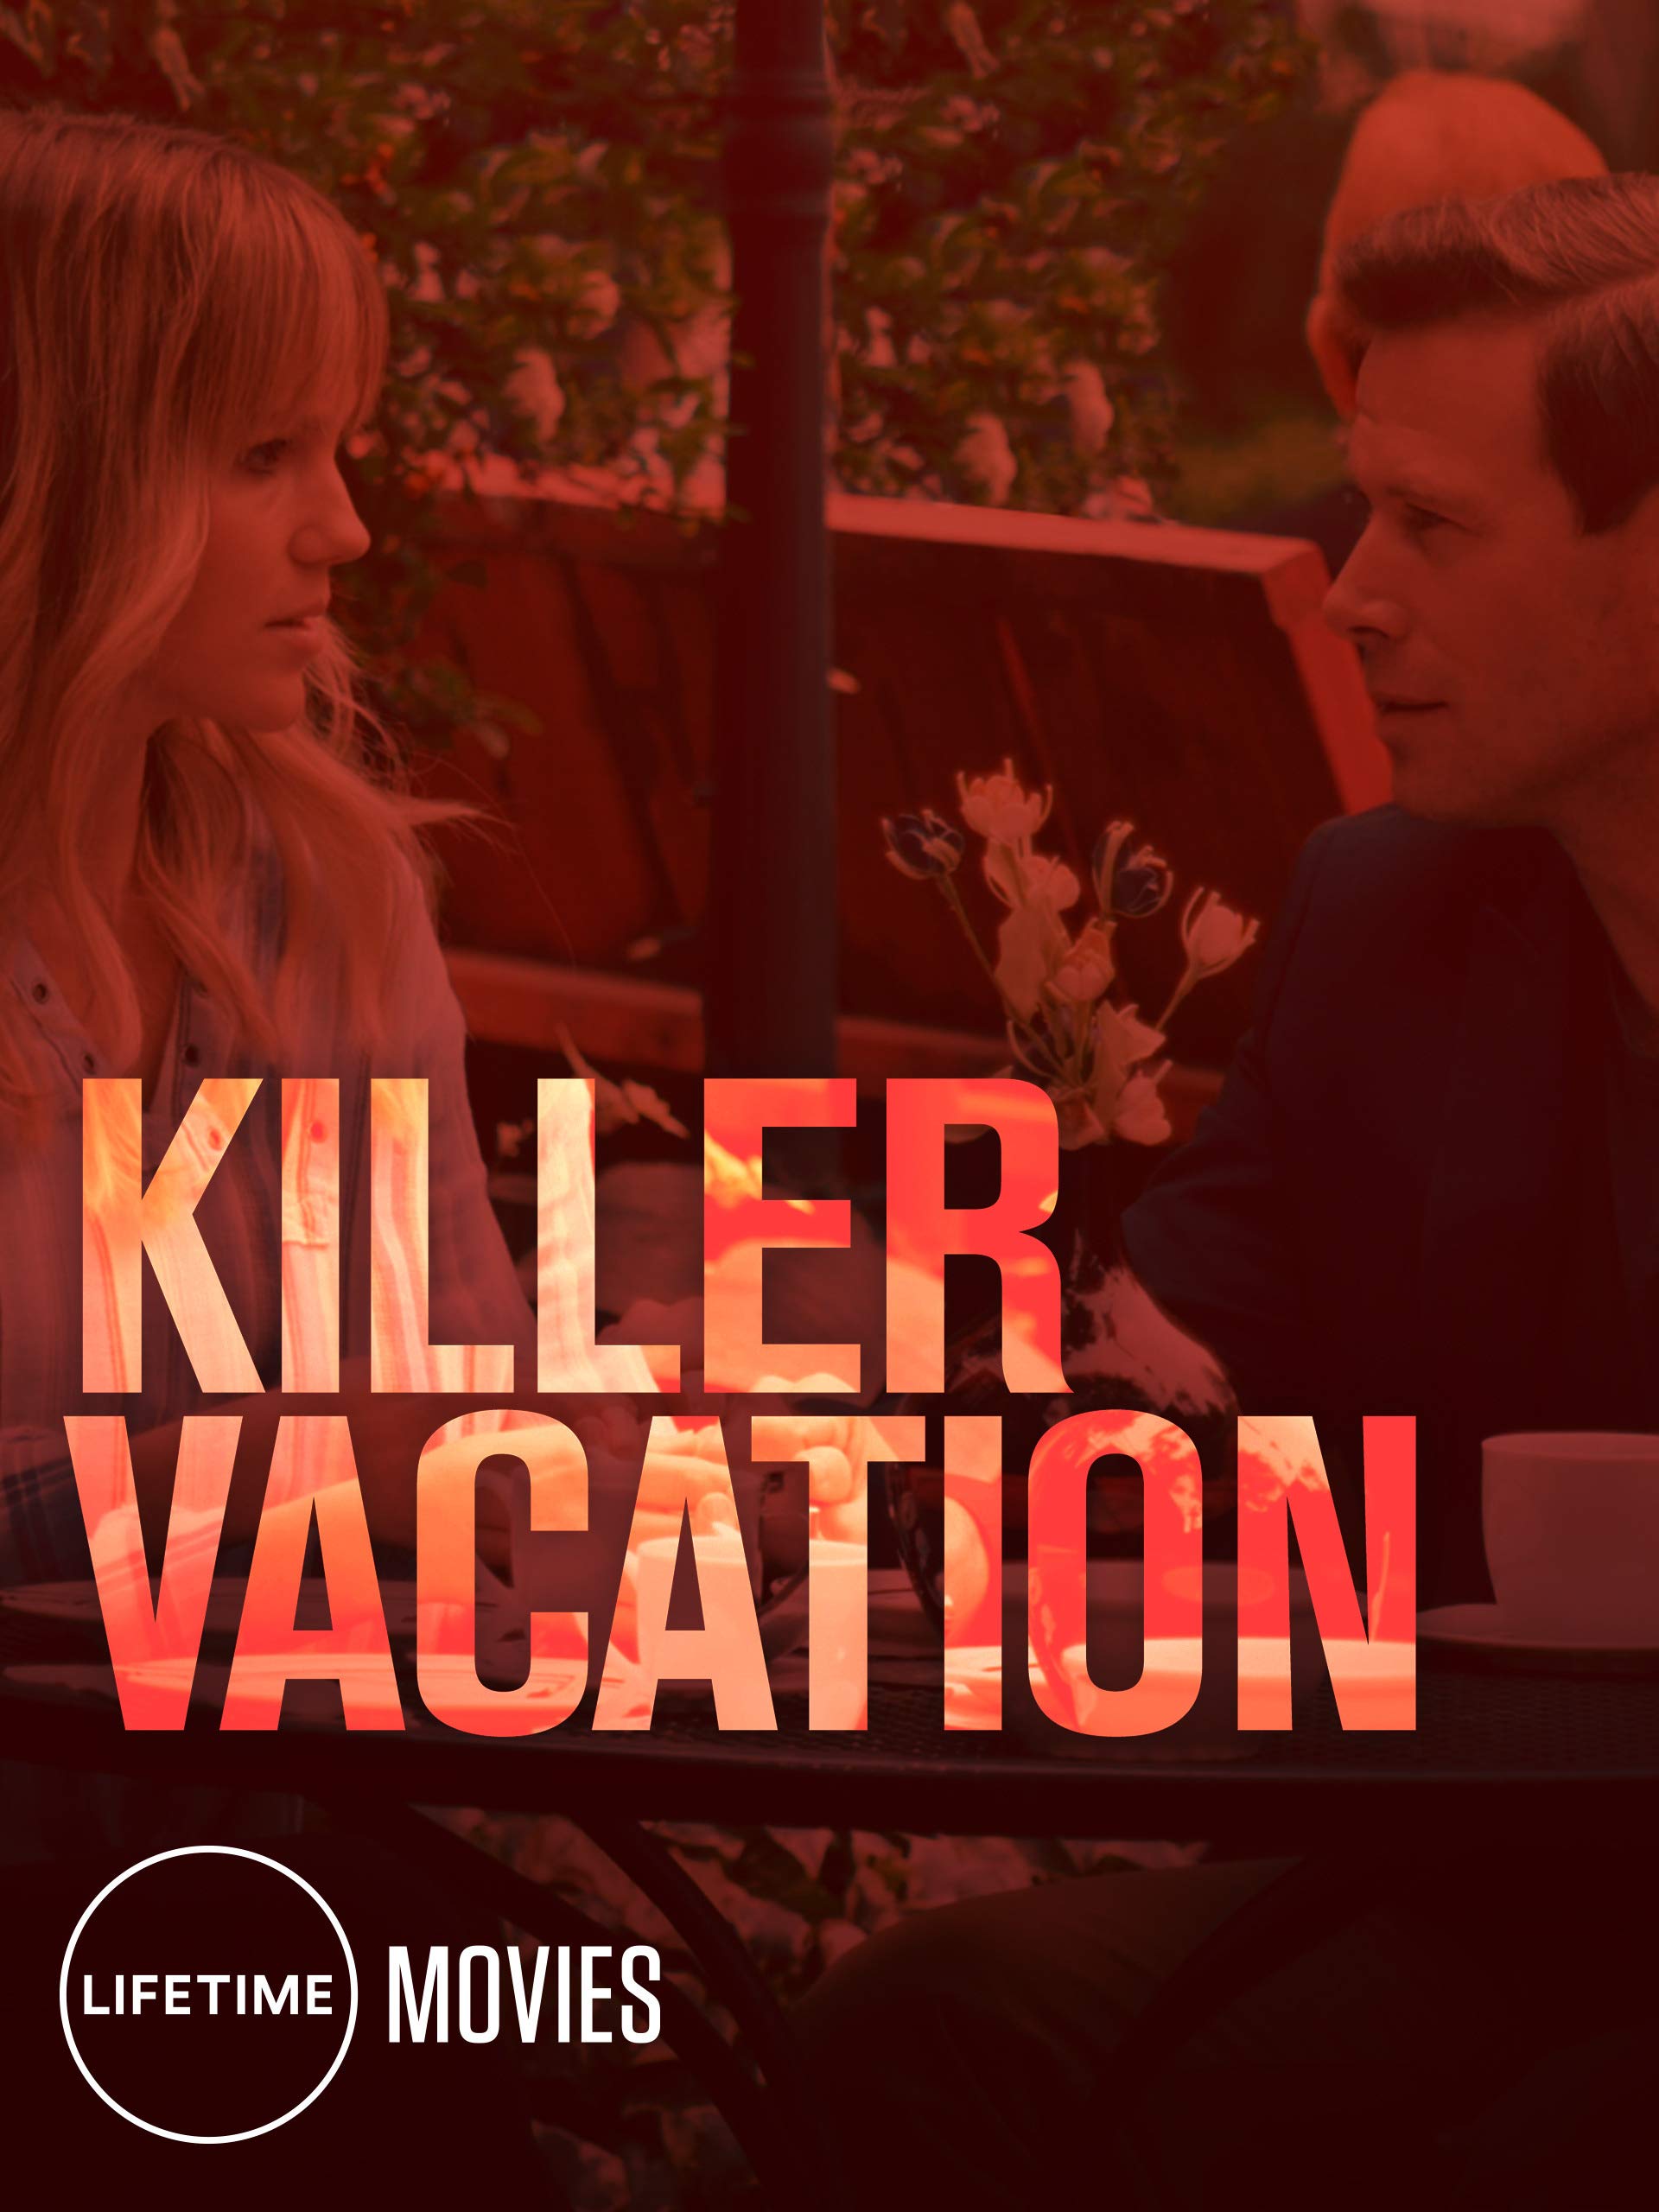 Killer Vacation (2018) Screenshot 5 